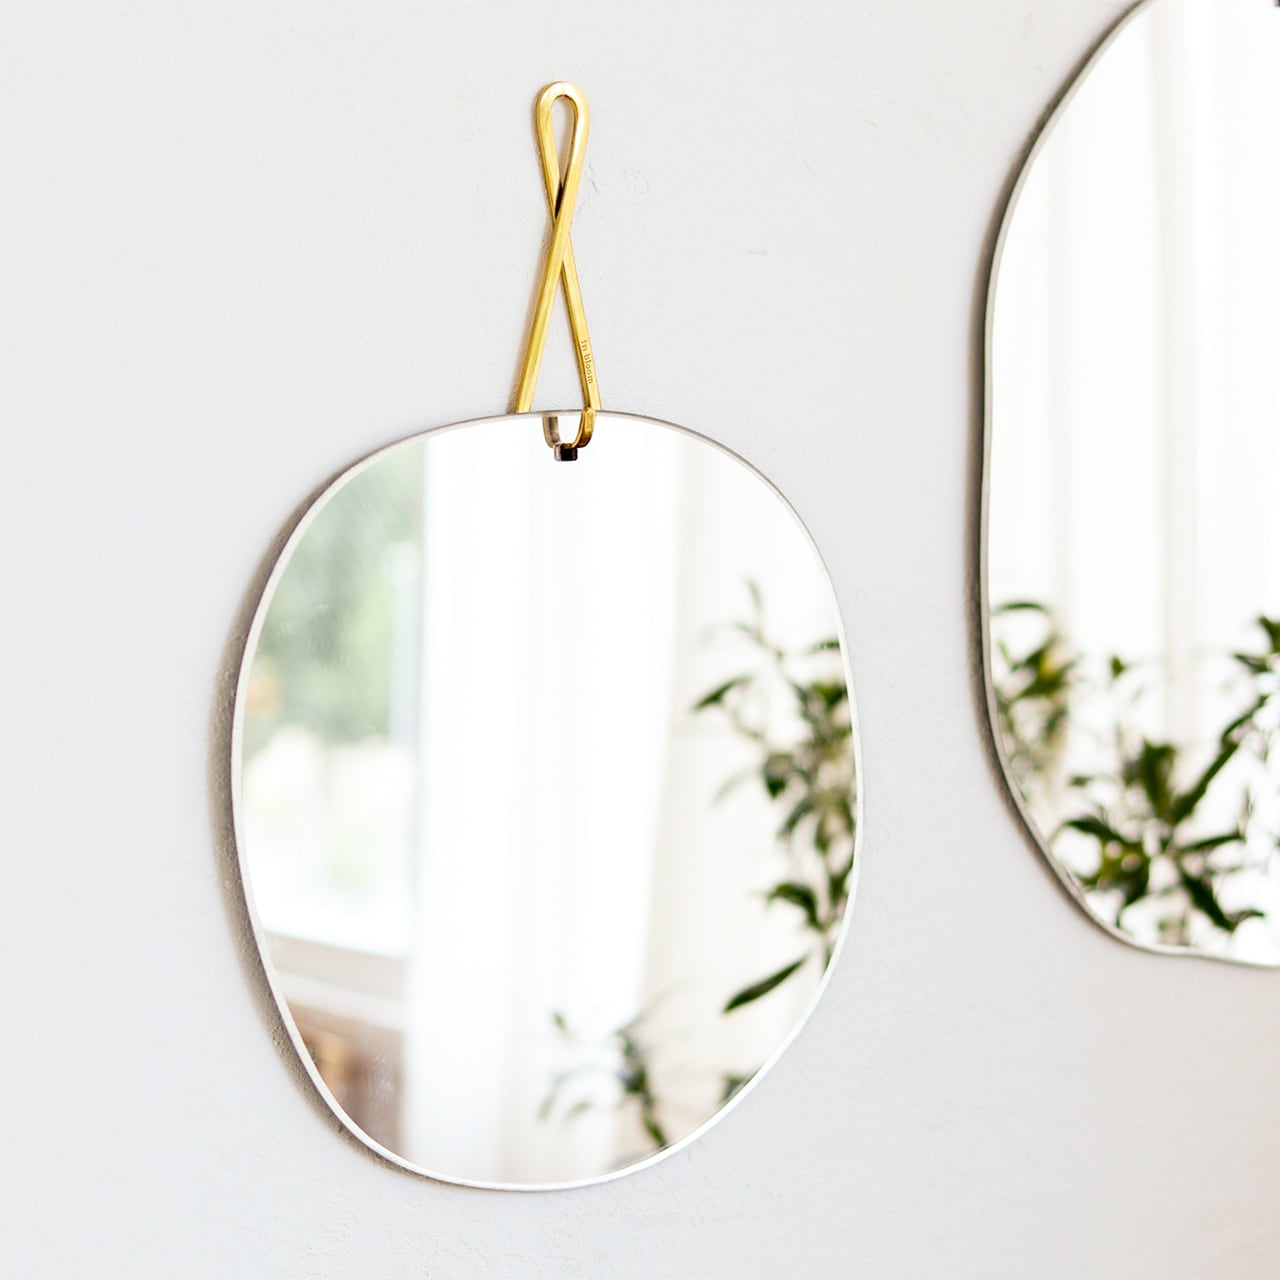 Brass wall mirror (Ssize)